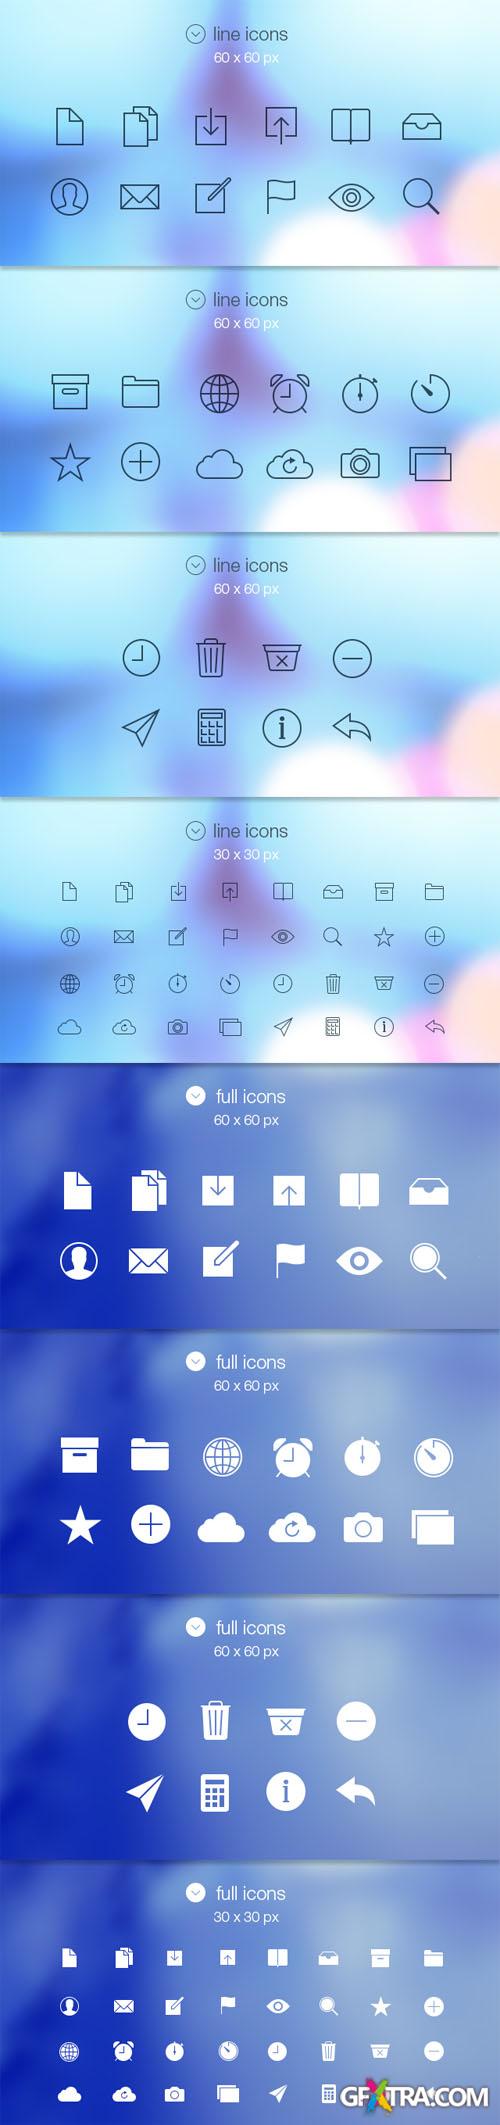 Pixeden - Tab Bar Icons iOS 7